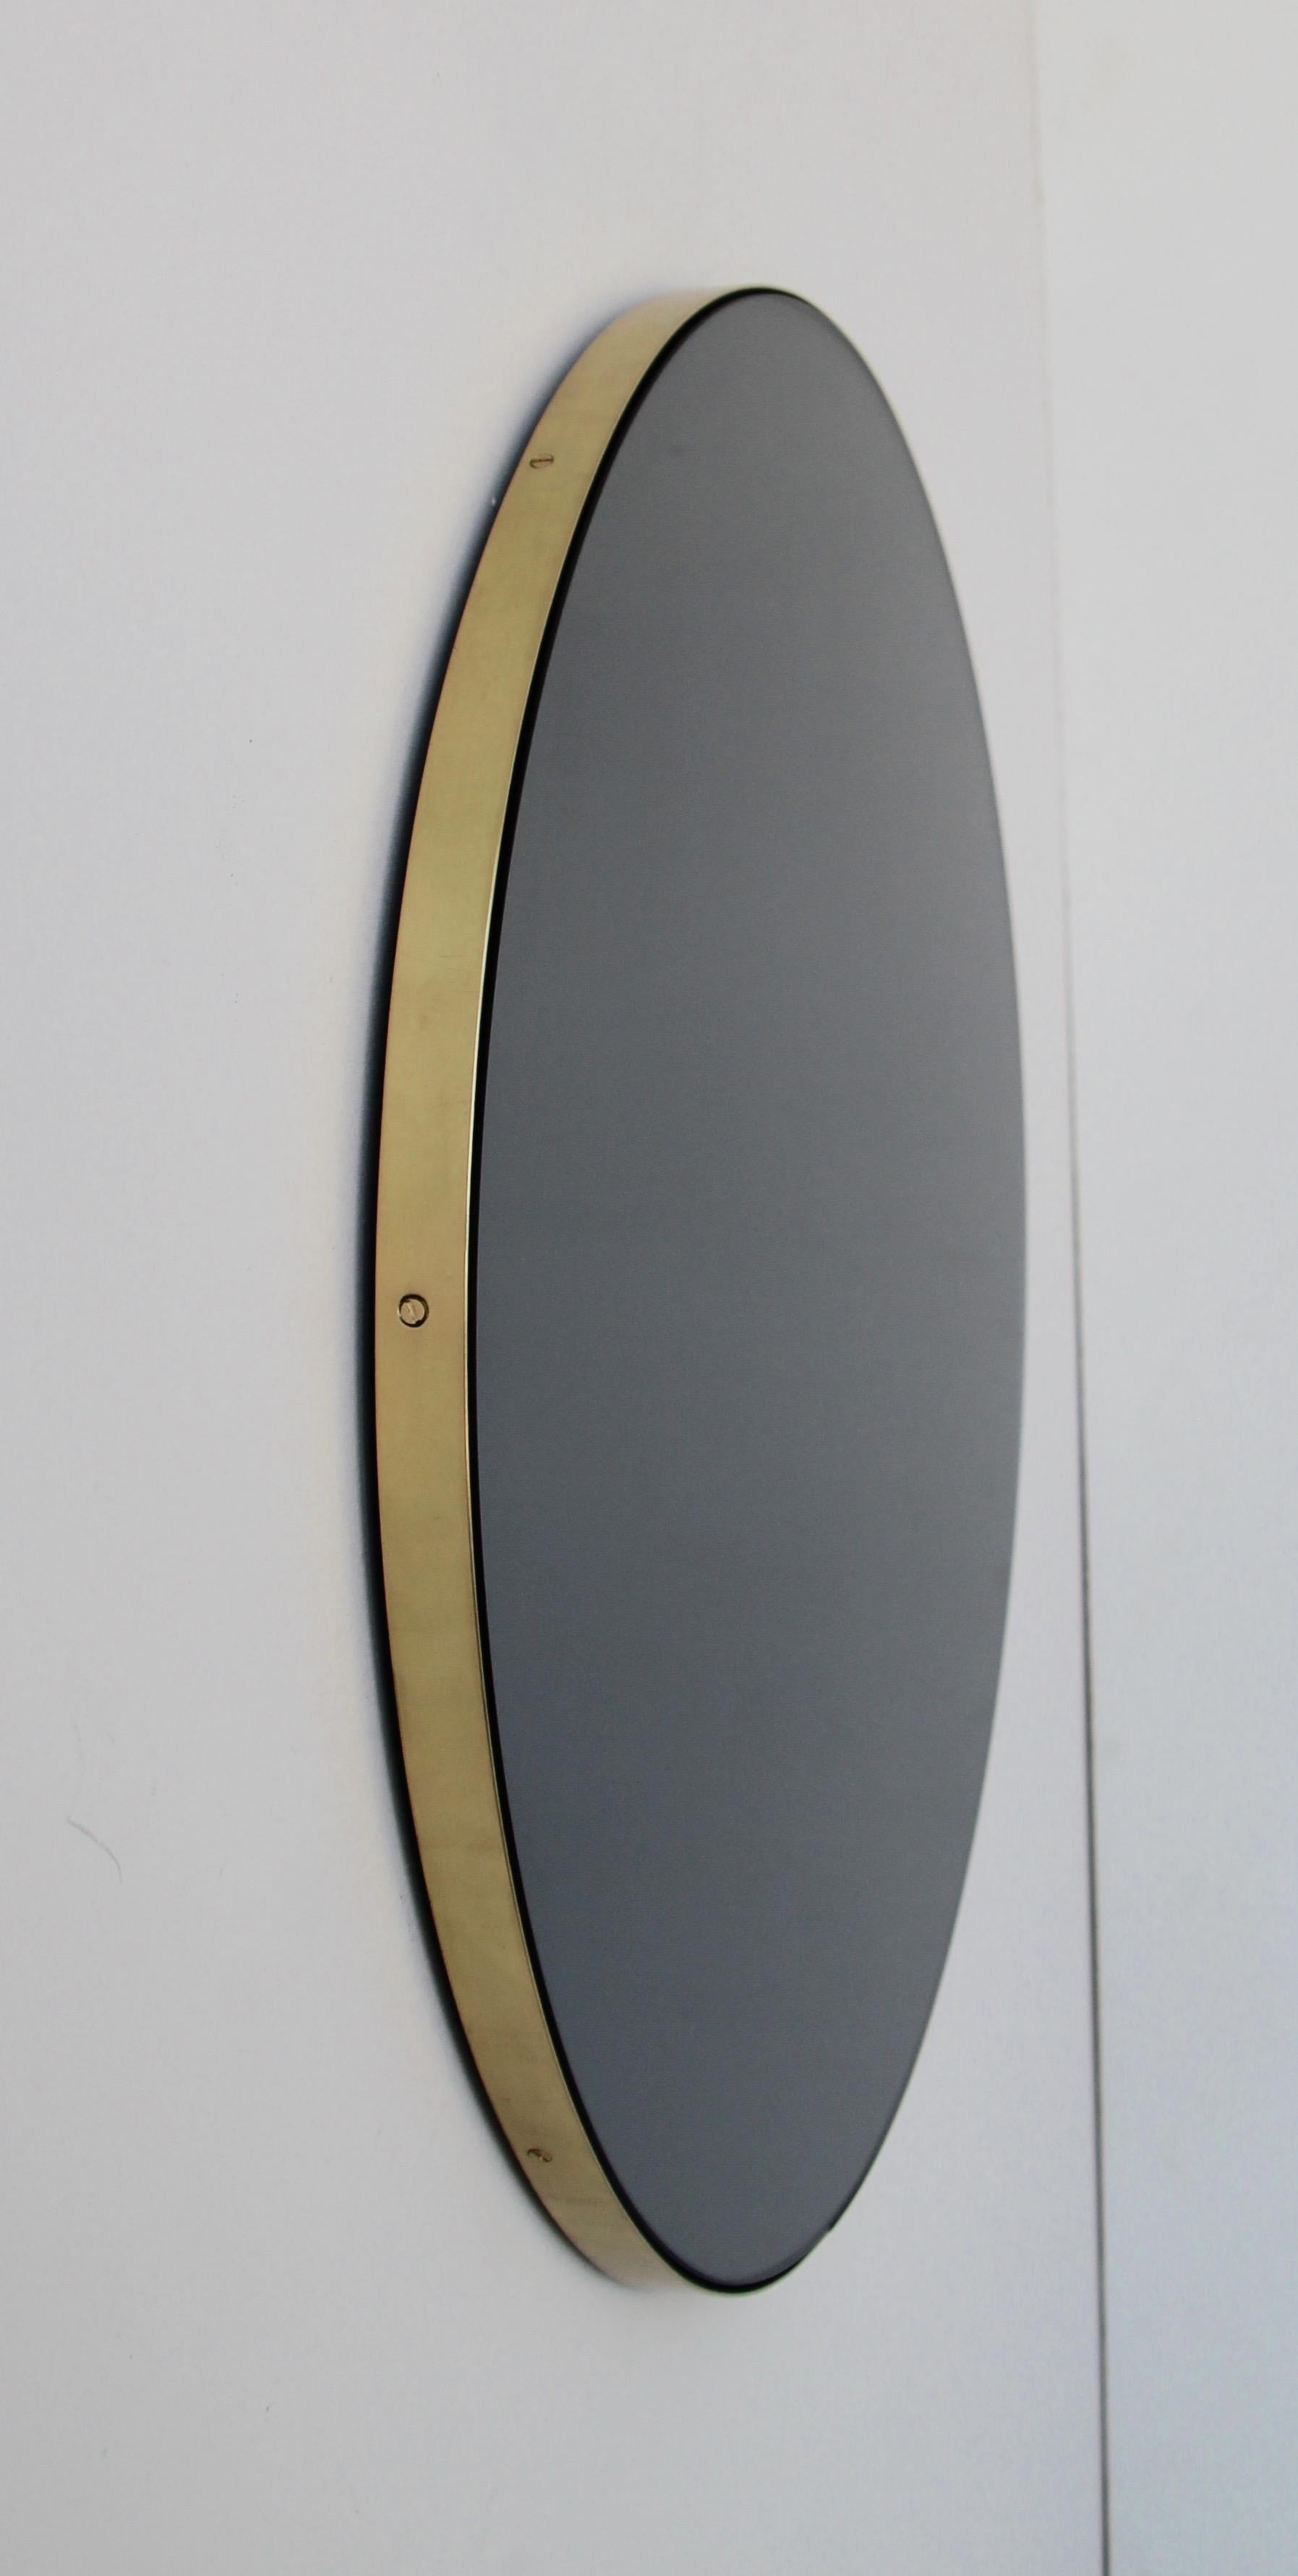 XXIe siècle et contemporain Orbis Black Tinted Round Contemporary Mirror with a Brass Frame, Small (Miroir contemporain rond teinté noir avec cadre en laiton) en vente